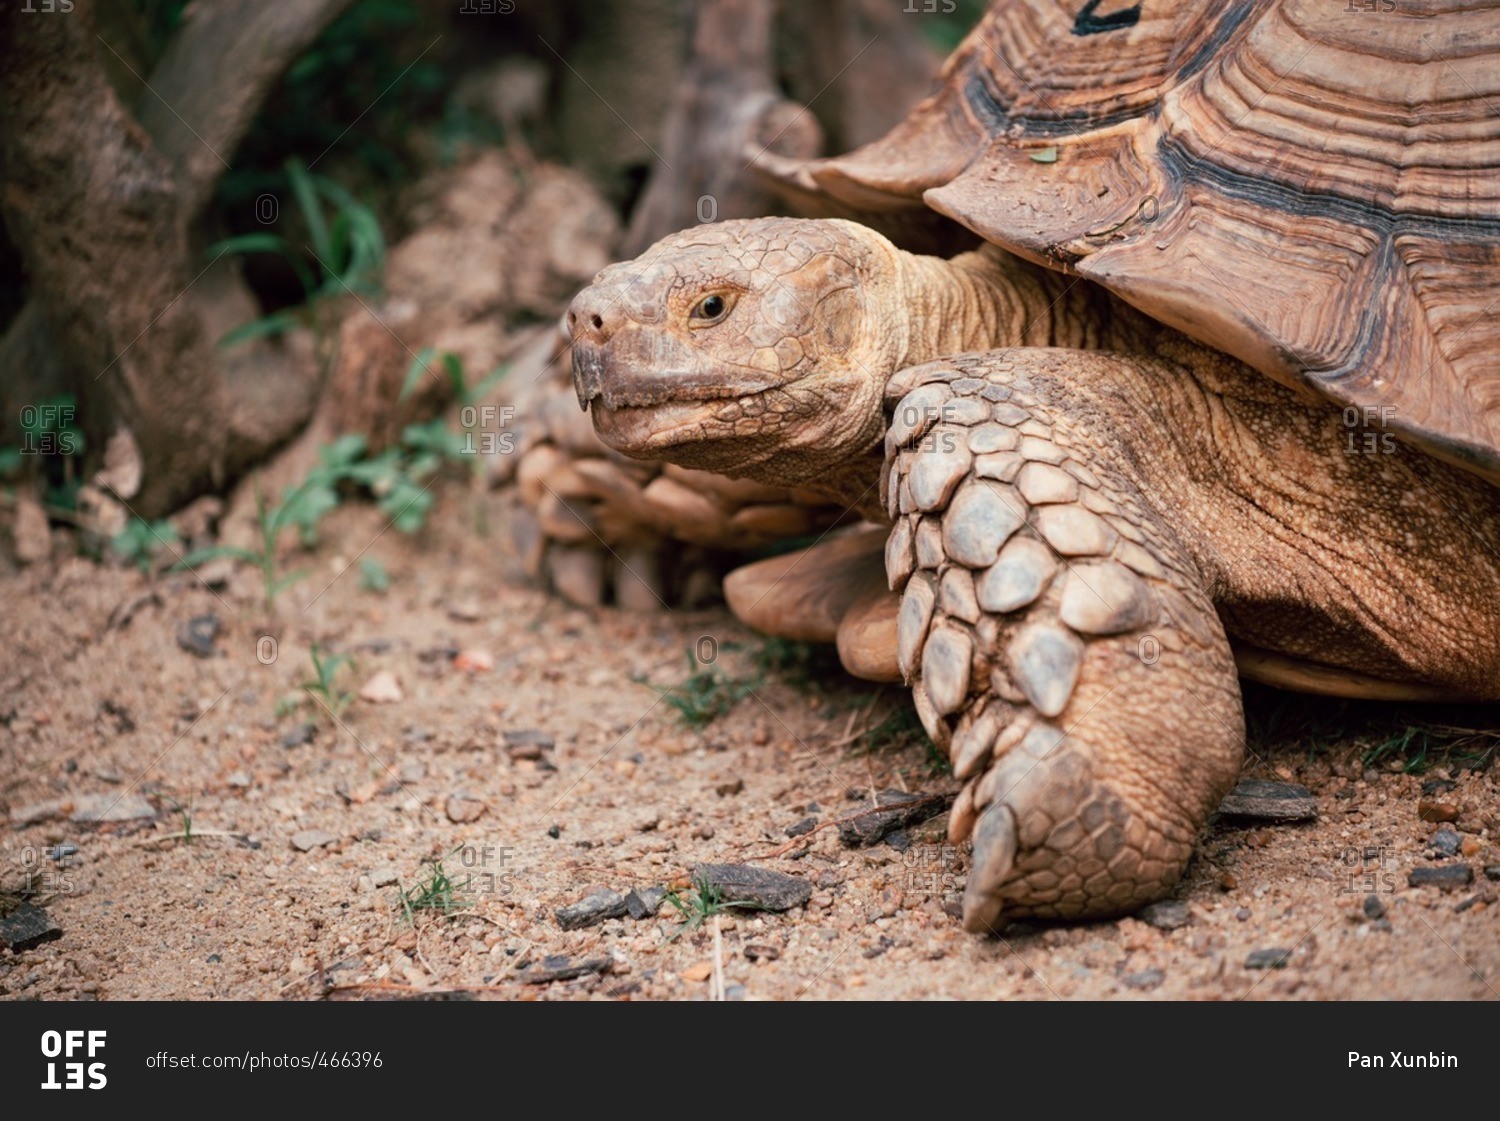 Sulcata tortoise in close up